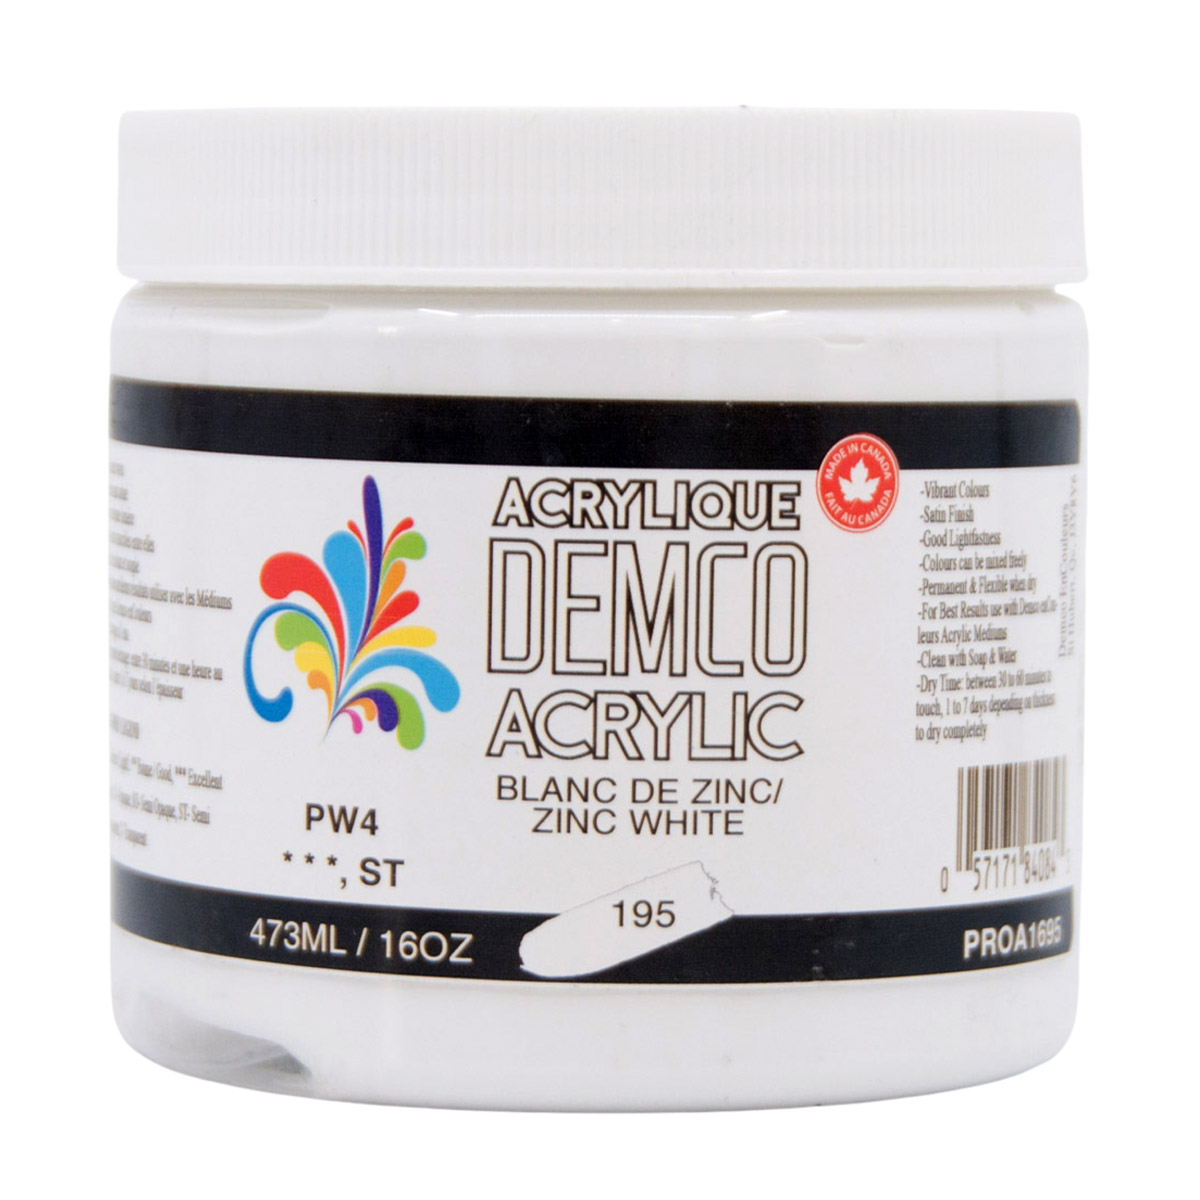 Demco Acrylic Zinc White 473ml/16oz